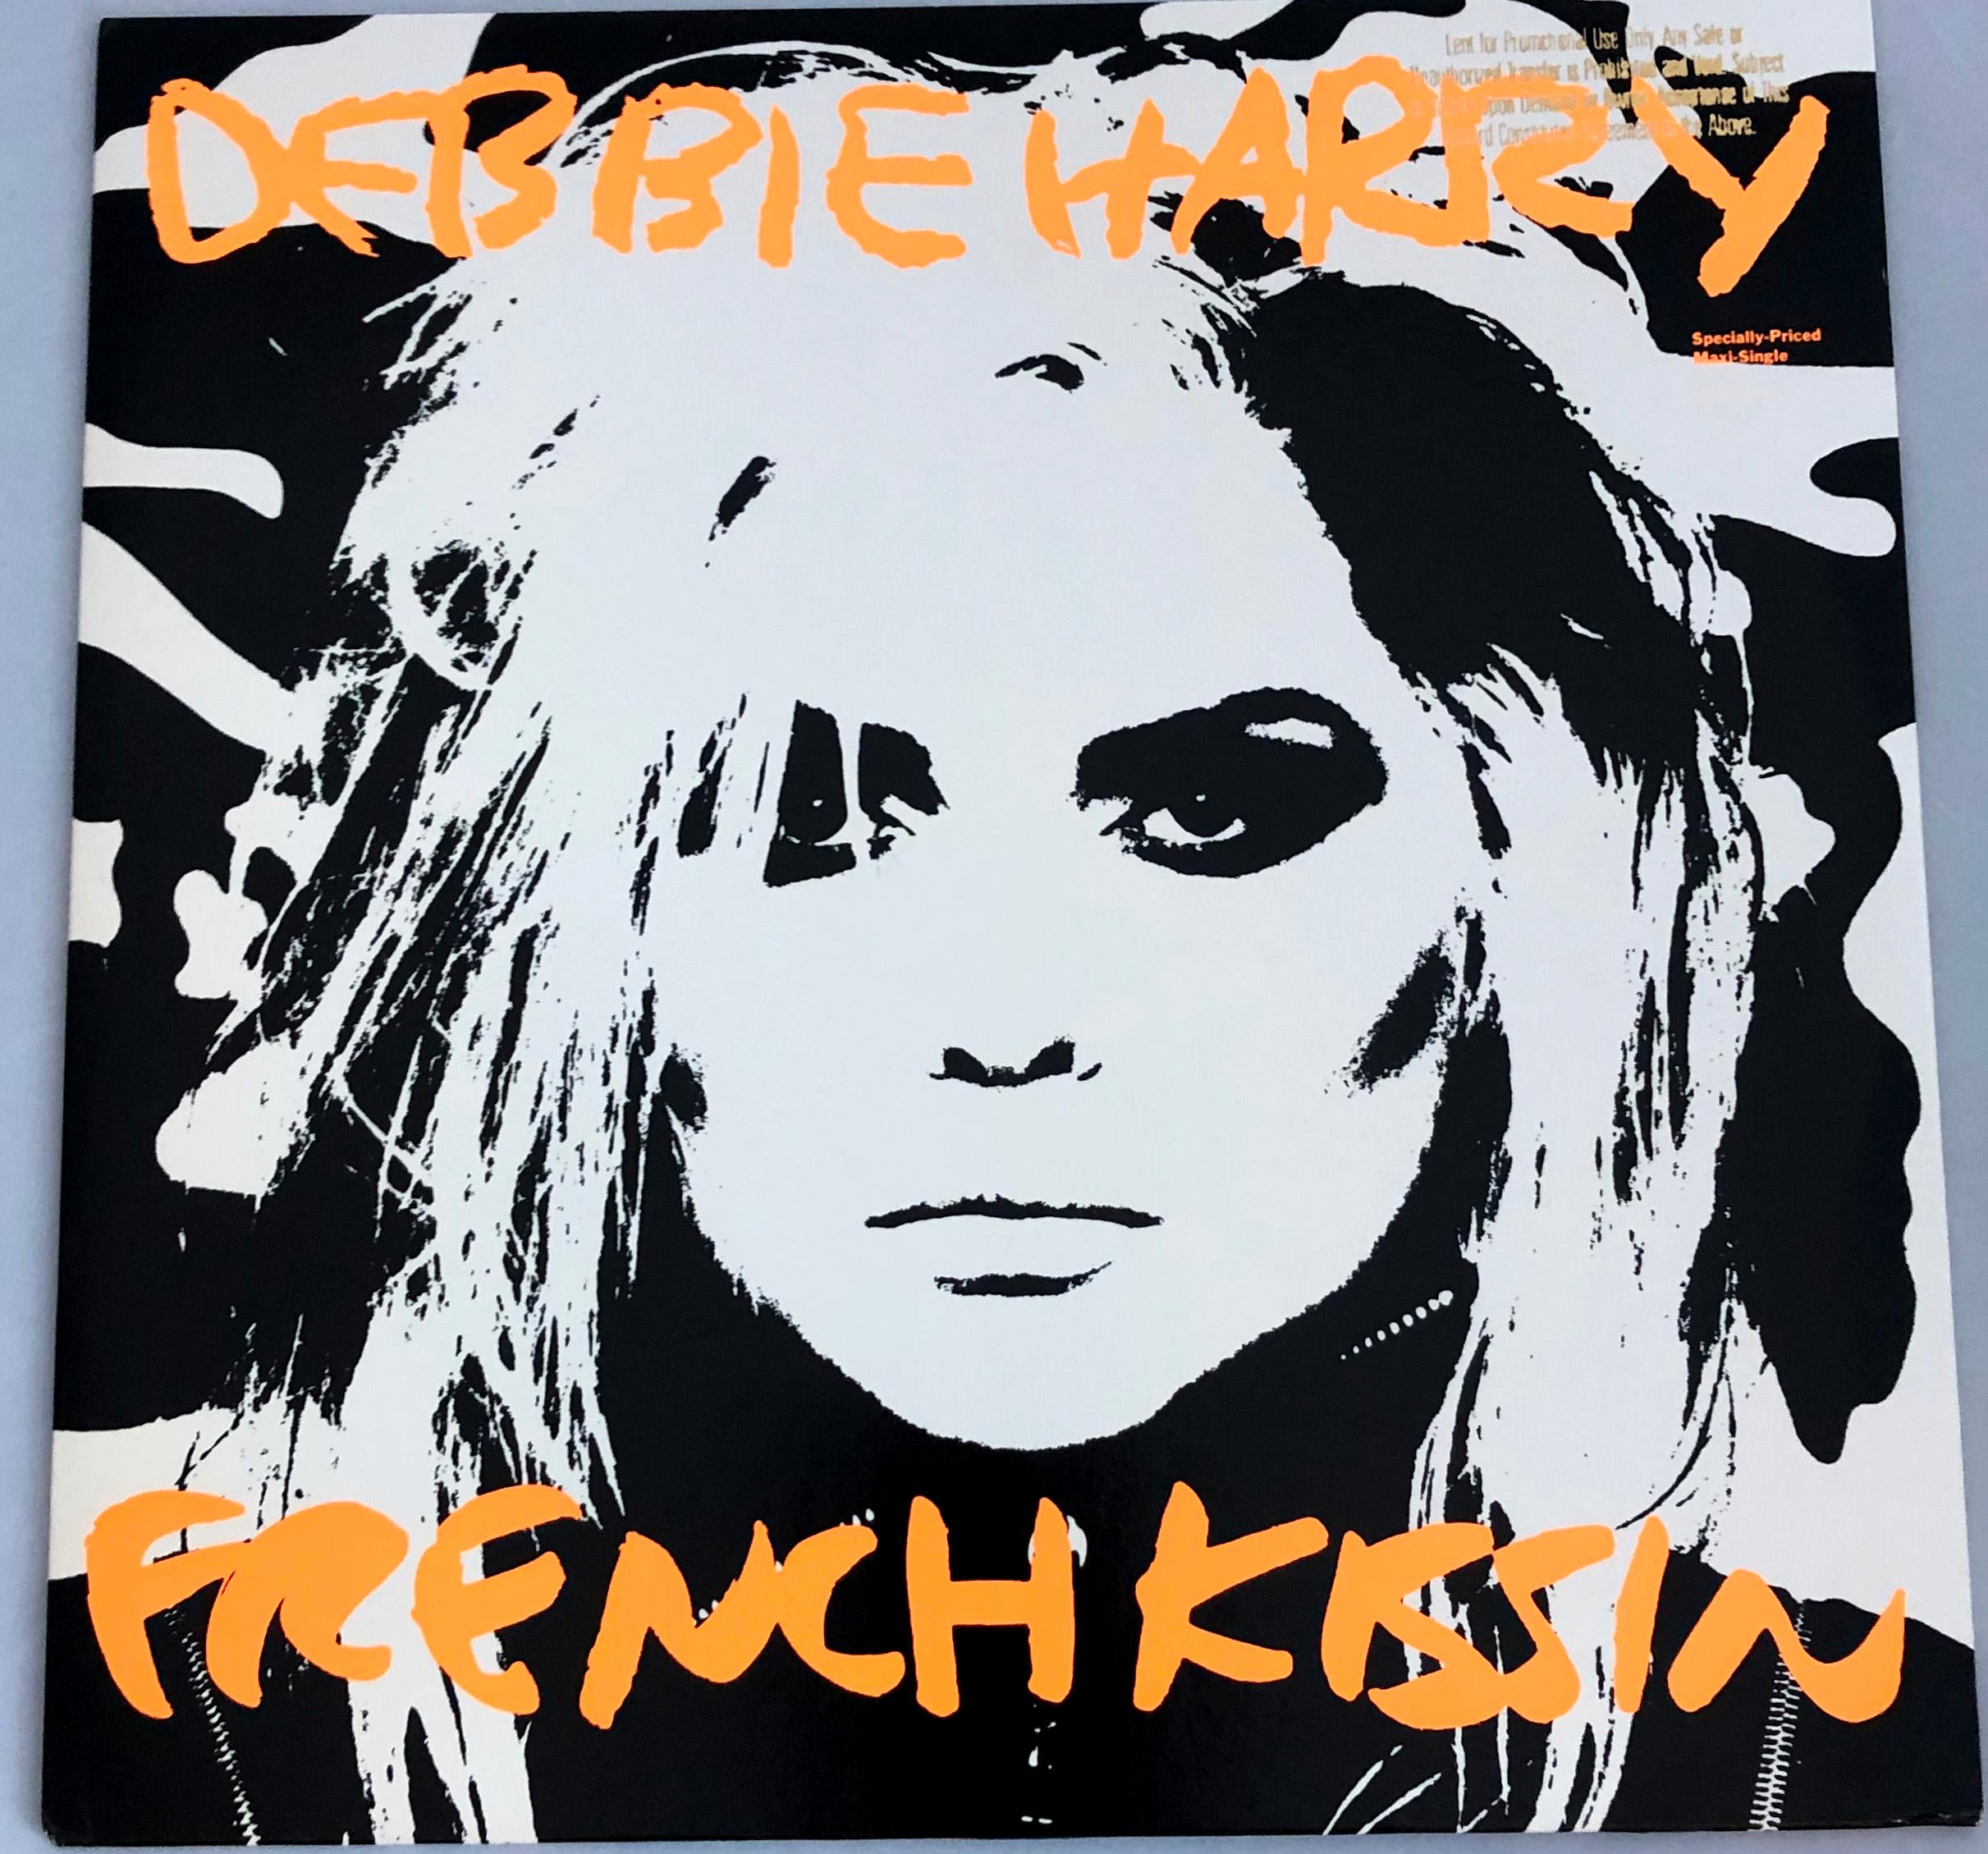 Andy Warhol Album Cover Art, 1986:
Debbie Harry, 